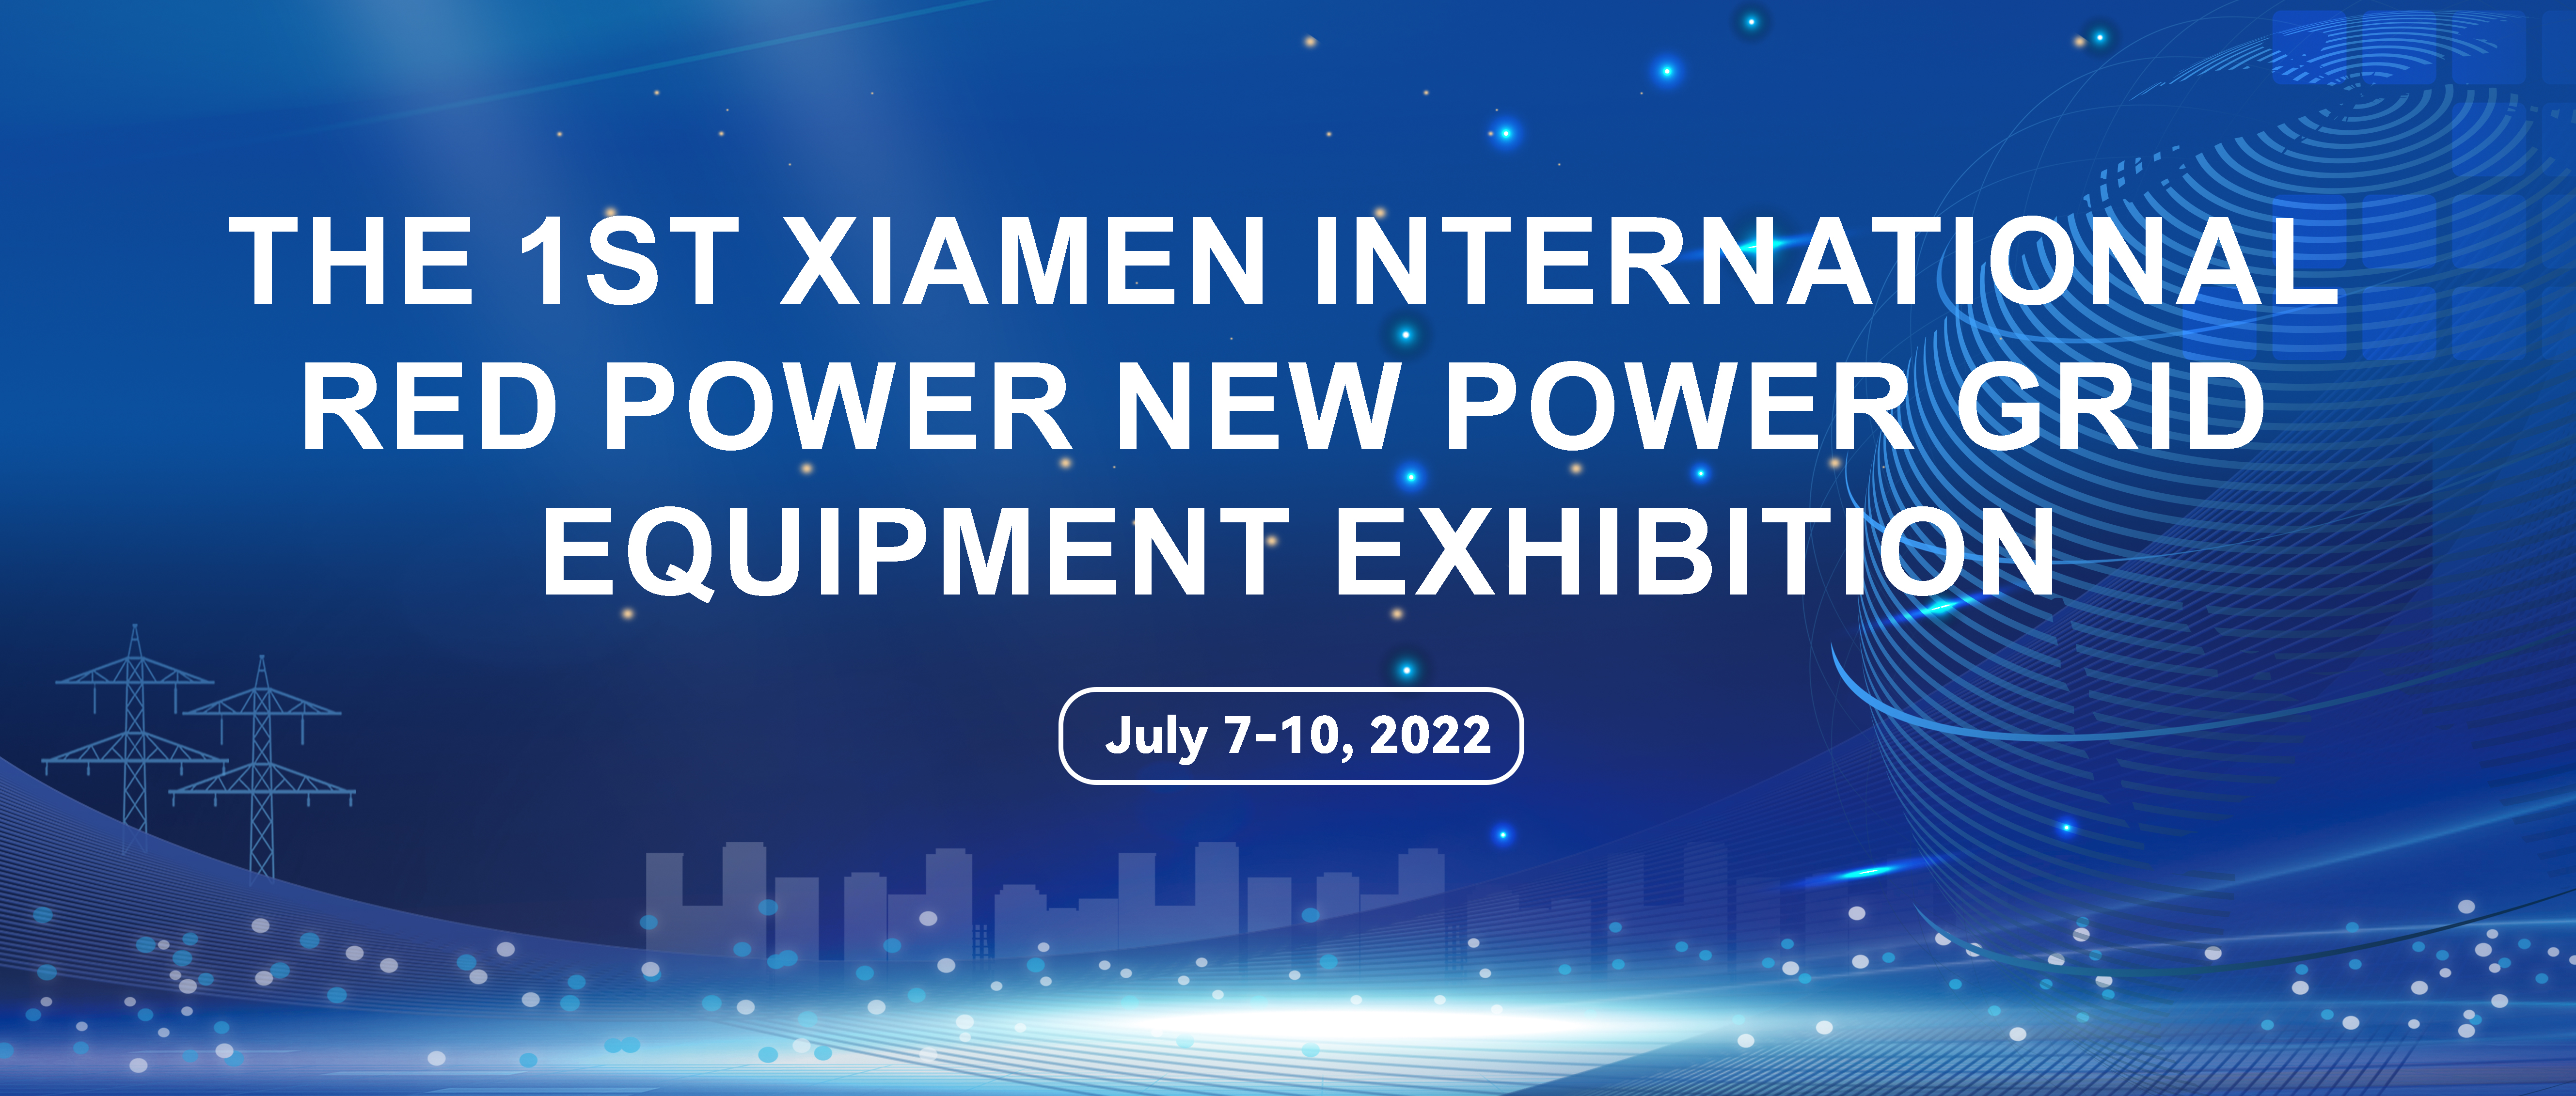 The 1st Xiamen International Red Power New Power Grid Equipment Exhibition